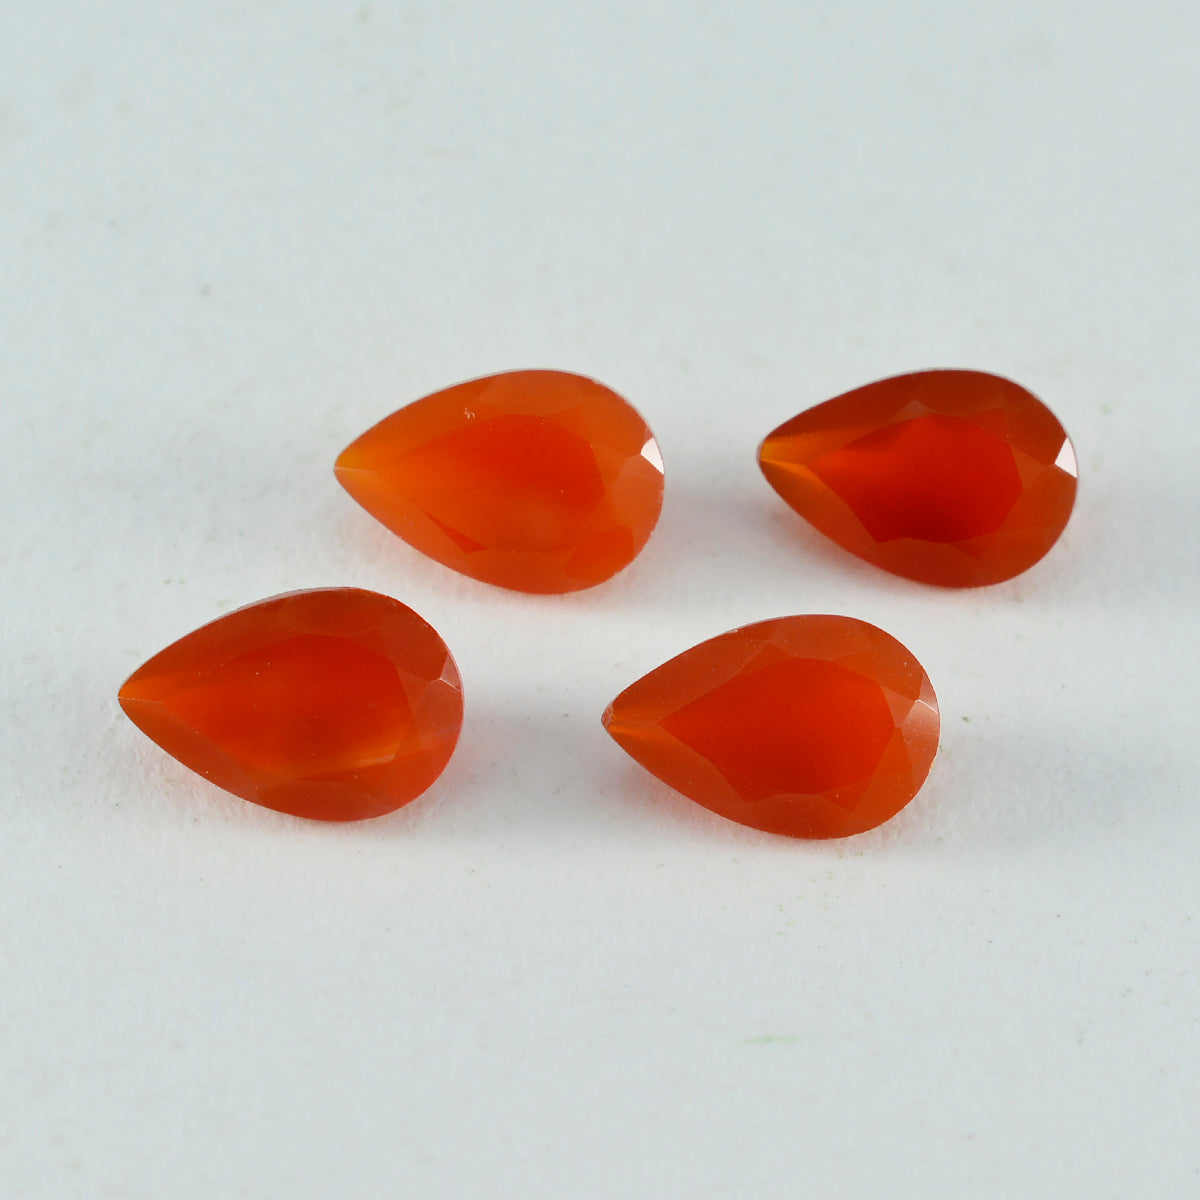 Riyogems 1PC Genuine Red Onyx Faceted 10x14 mm Pear Shape amazing Quality Stone